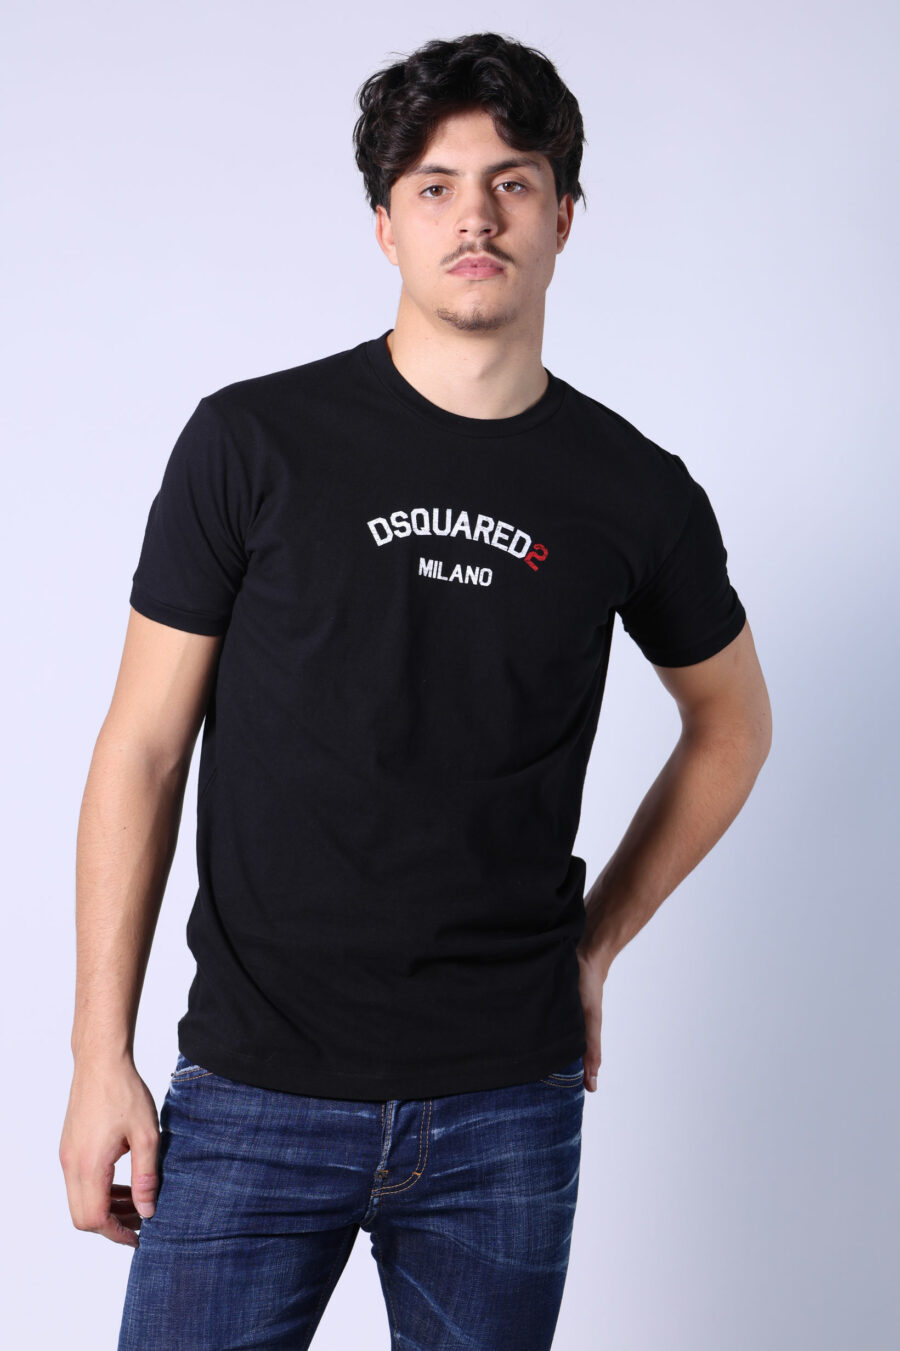 Camiseta negra con minilogo "dsquared2 milano" - Untitled Catalog 05472